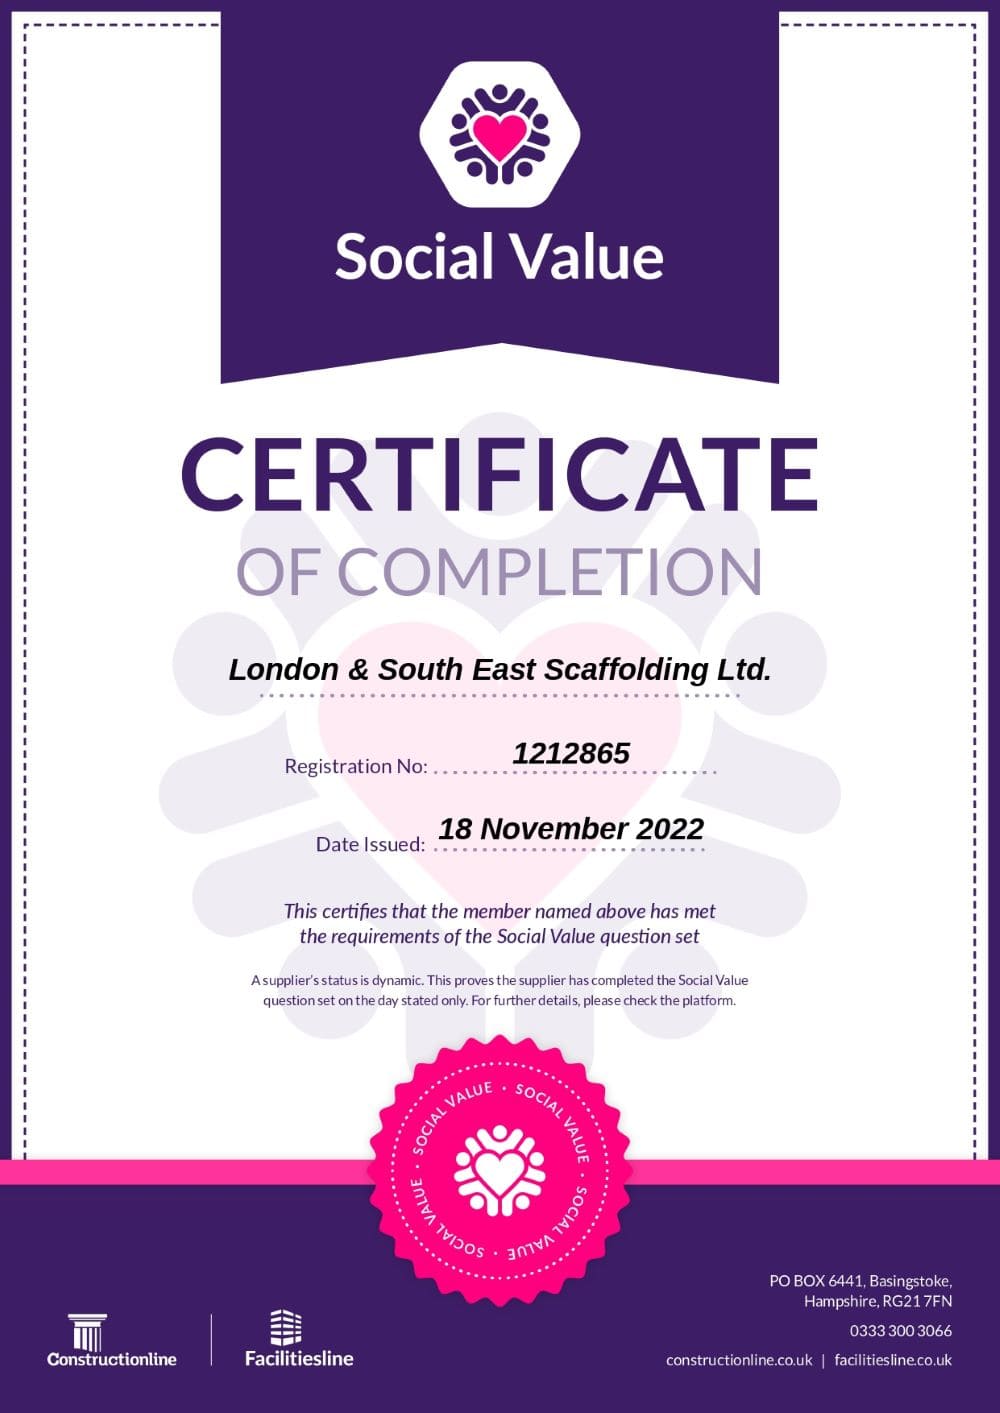 LSE Social Value Certification